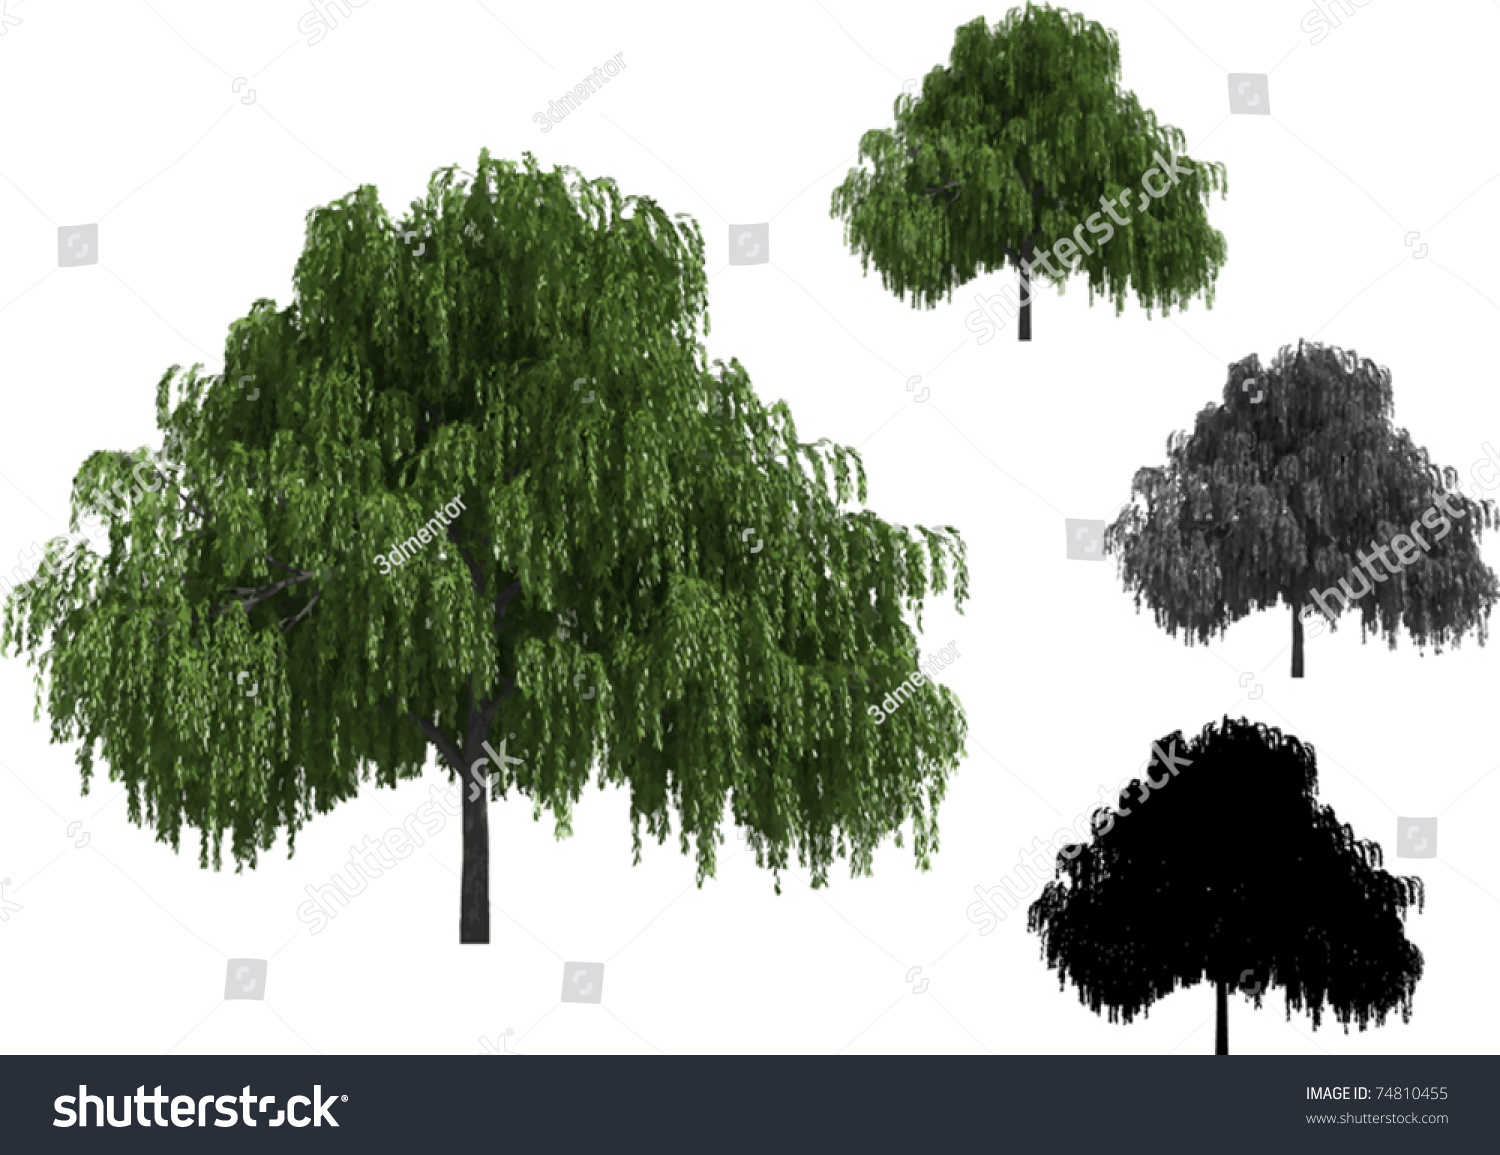 Vector Set Of Willow Trees - 74810455 : Shutterstock